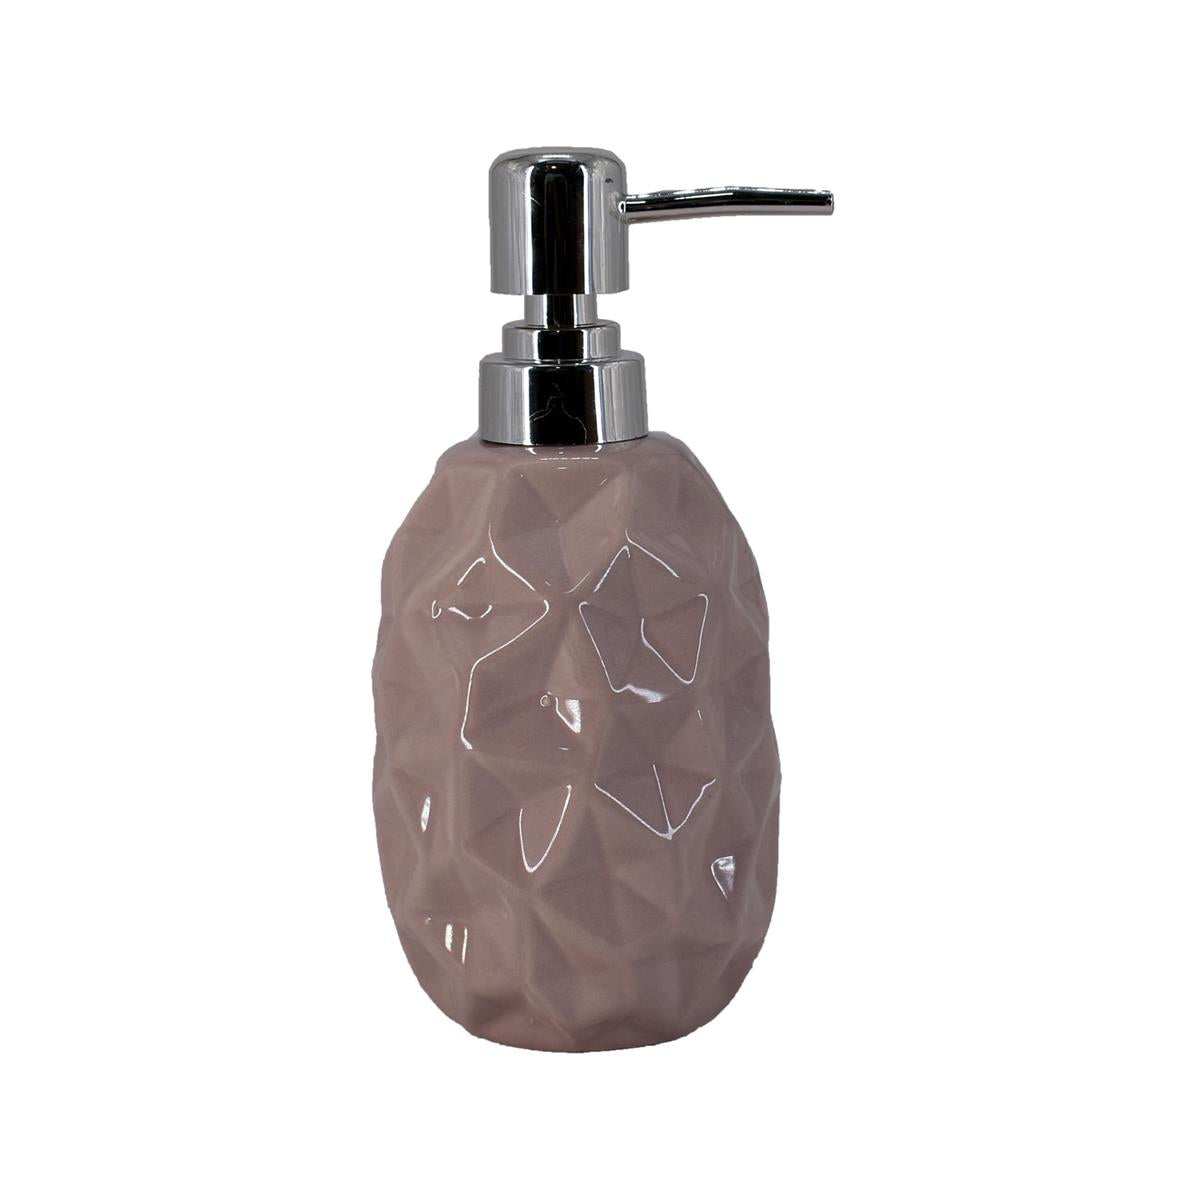 Ceramic Soap Dispenser Pump for Bathroom for Bath Gel, Lotion, Shampoo (7622)